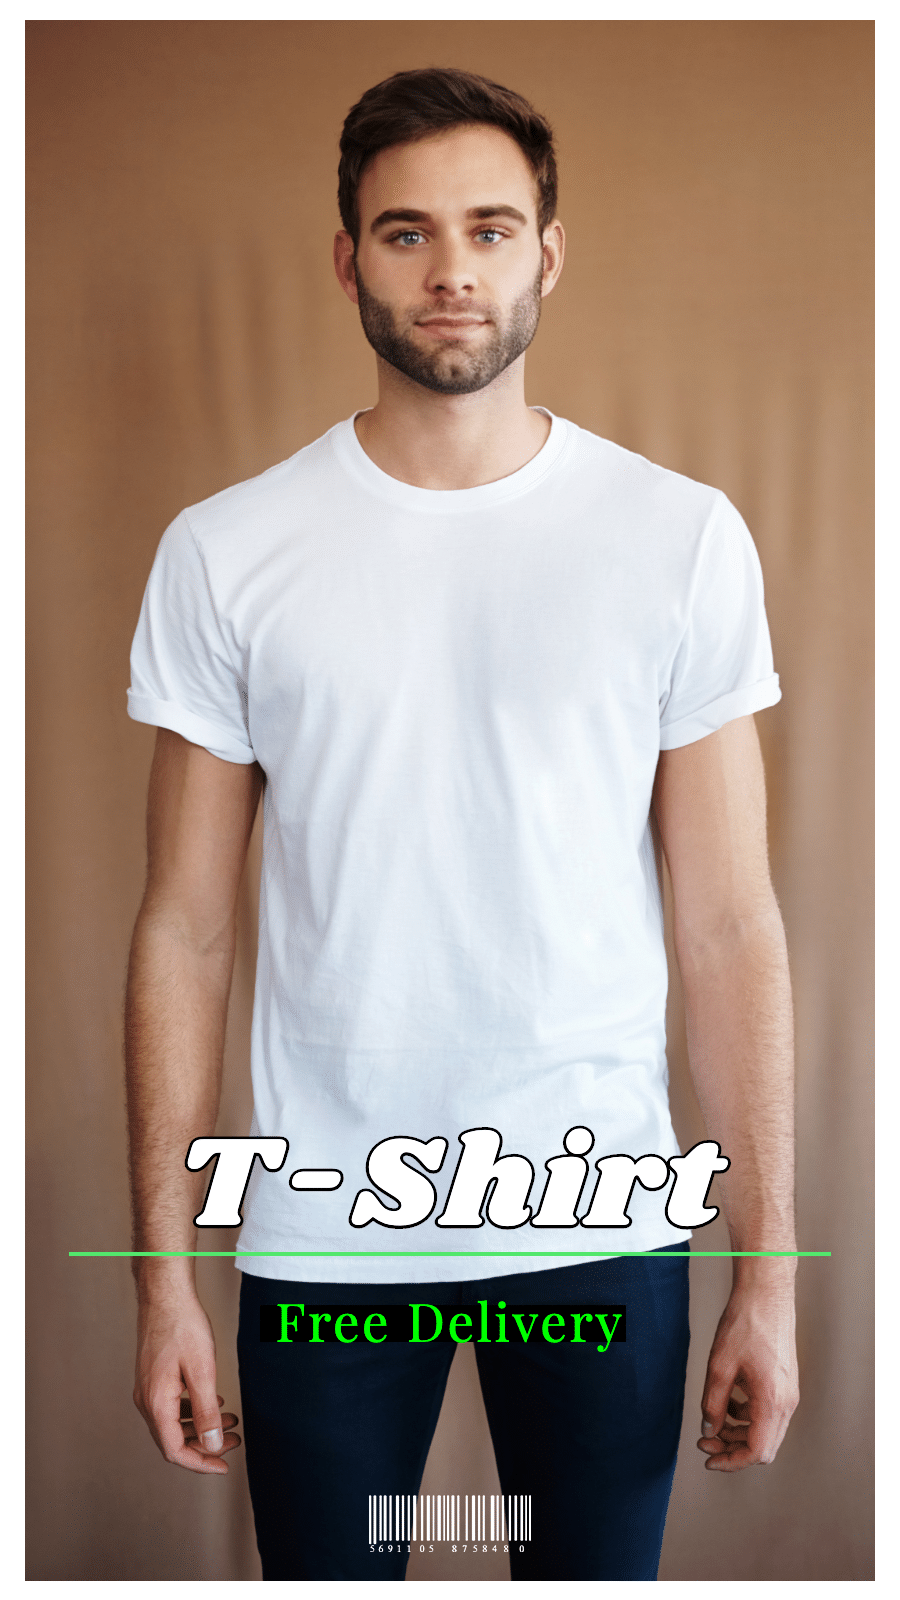 Simple Fashion Men's T-Shirt Display Instagram Story预览效果